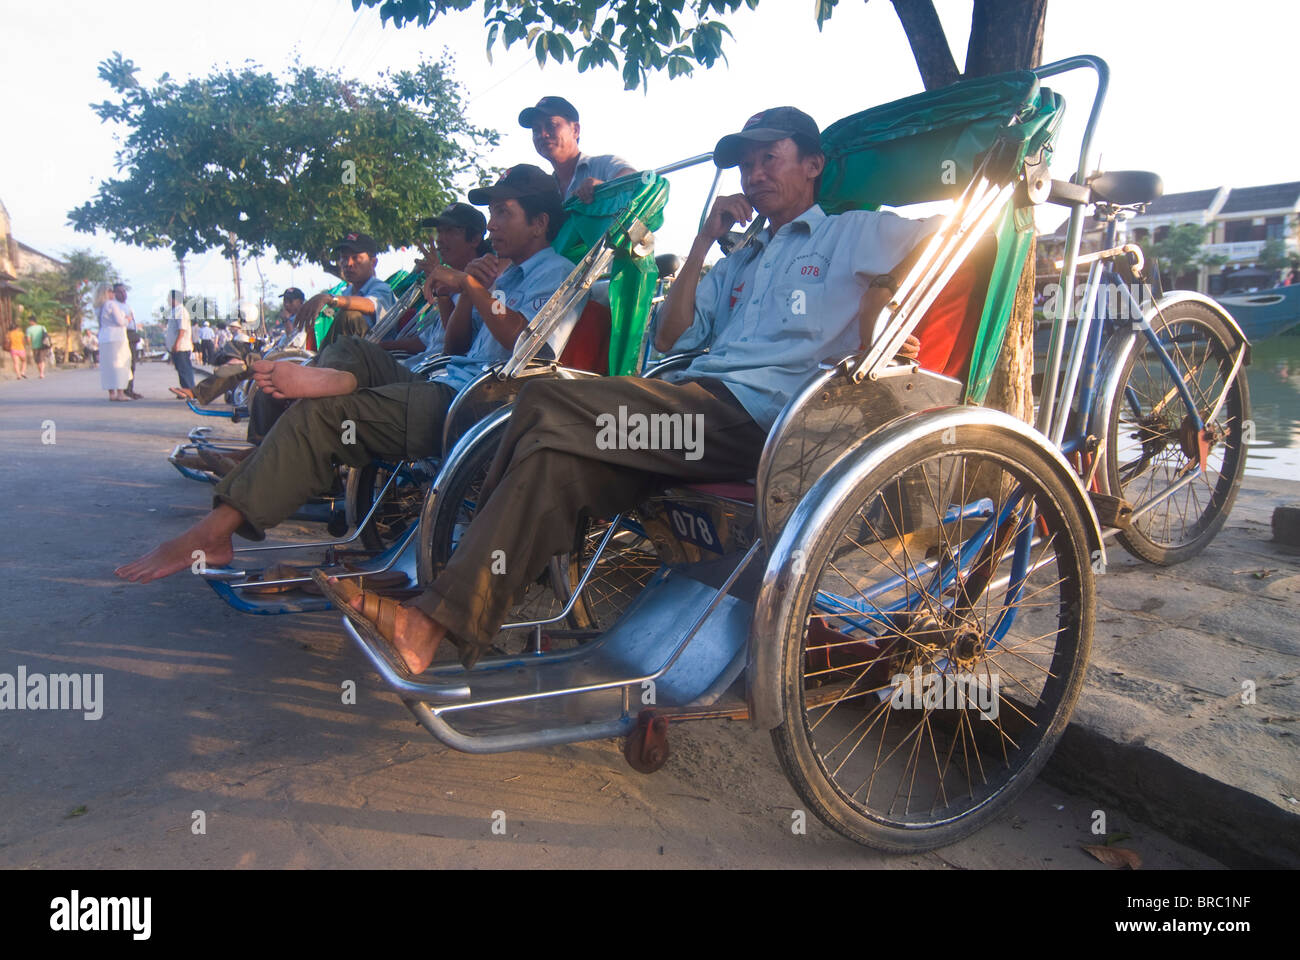 Rickshaw drivers sitting in the rickshaws waiting for customers, Hoi An, Vietnam, Indochina Stock Photo